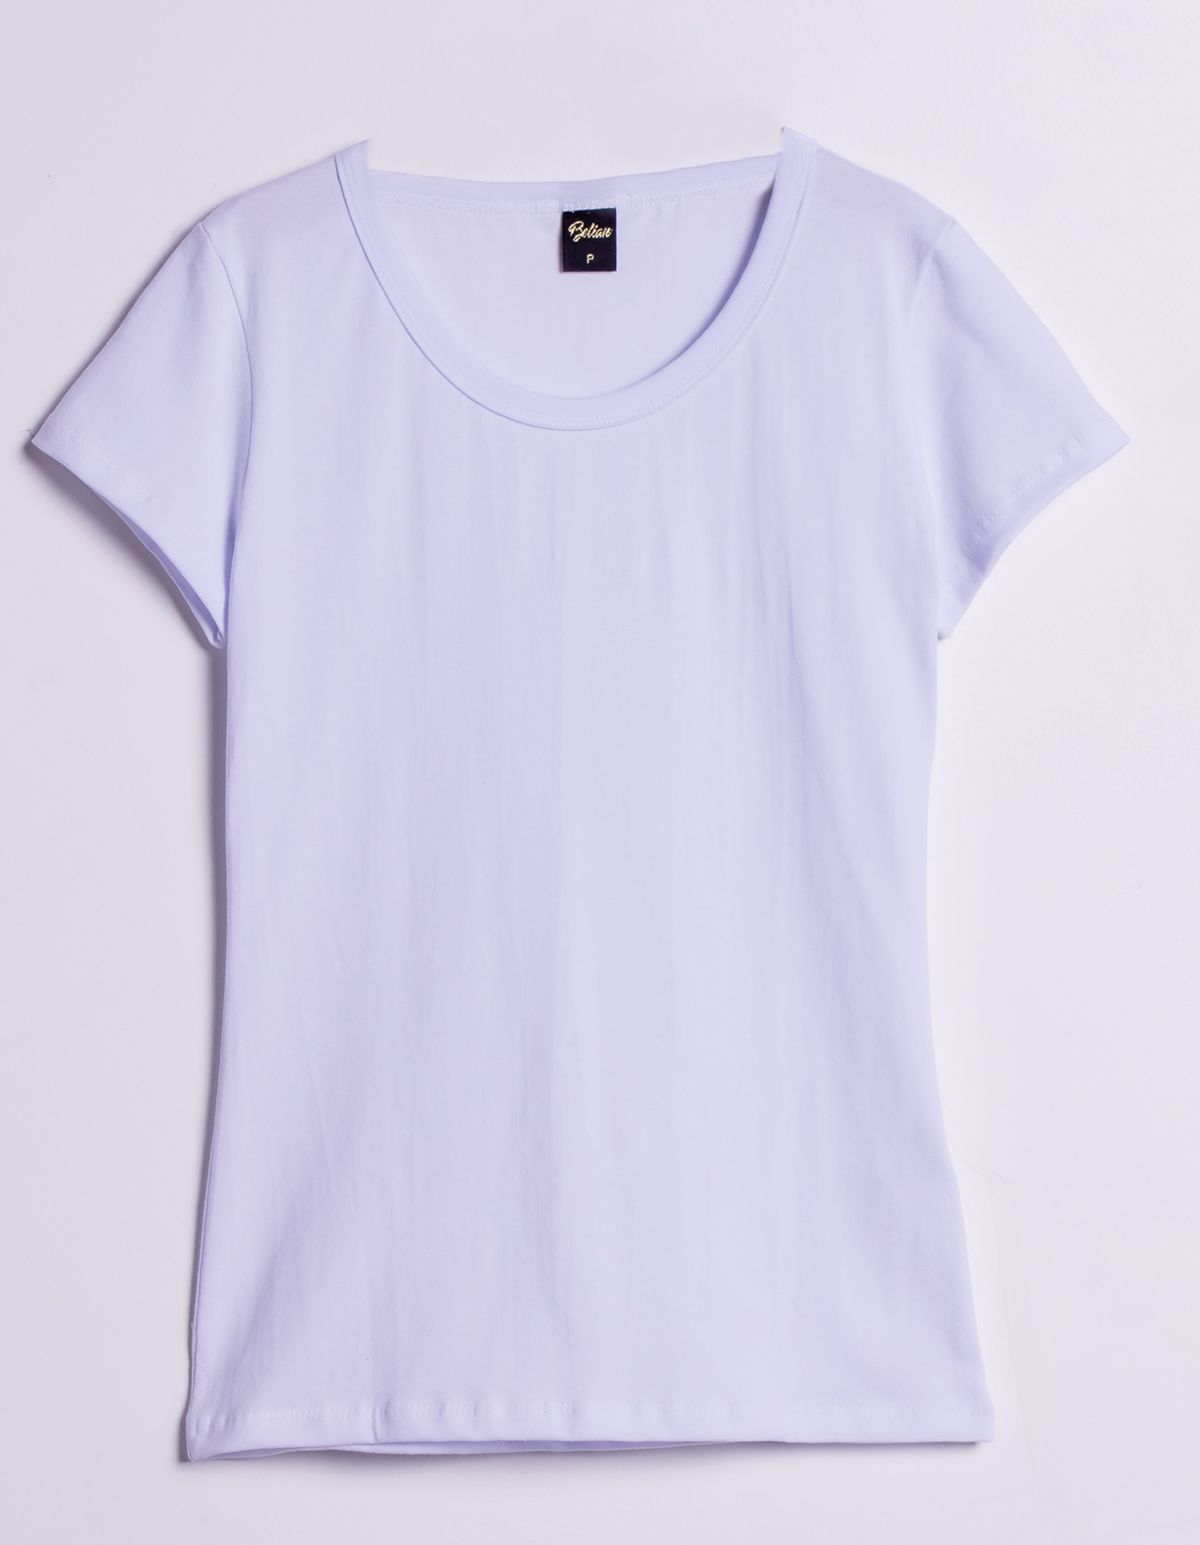 596508004-camiseta-manga-curta-basica-feminina-decote-redondo-branco-gg-b14